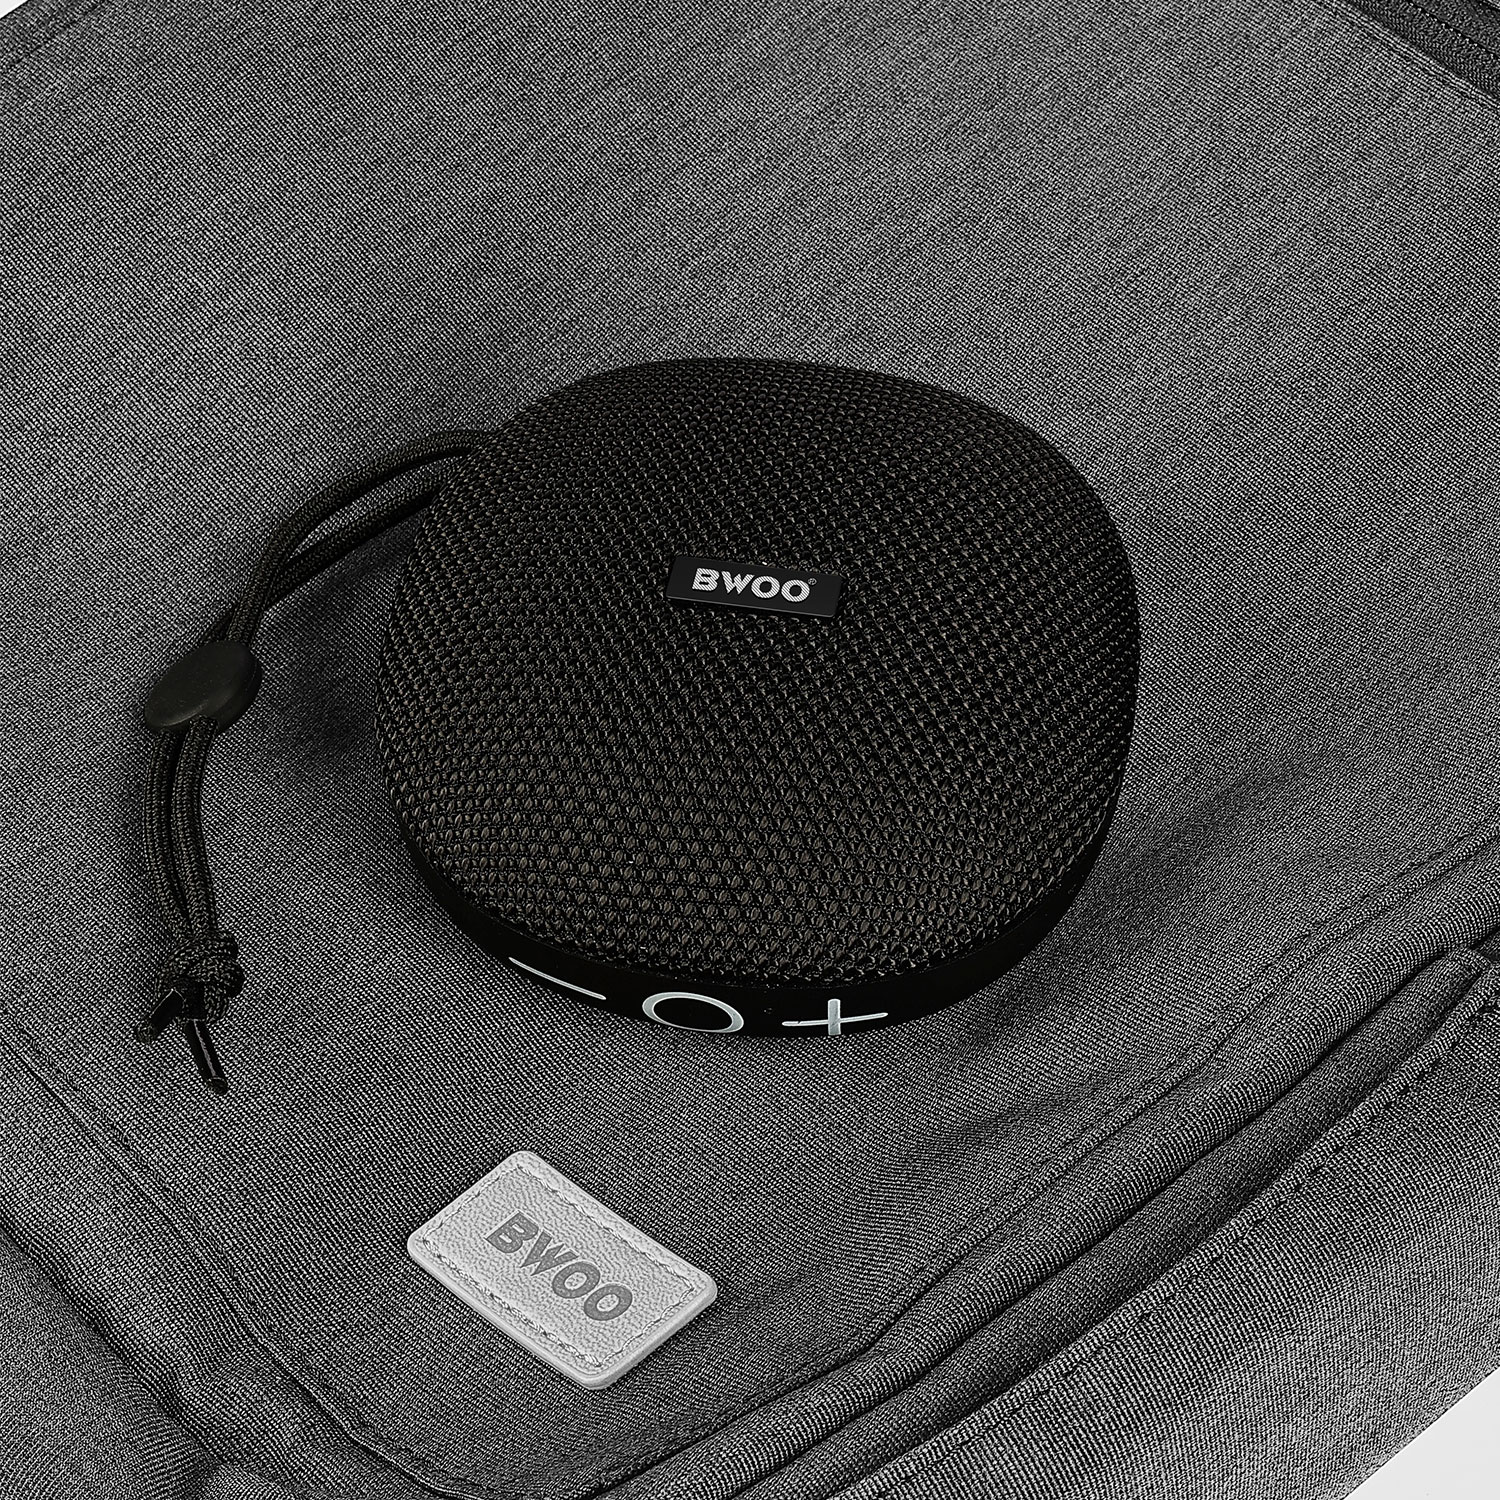 mini portable speaker